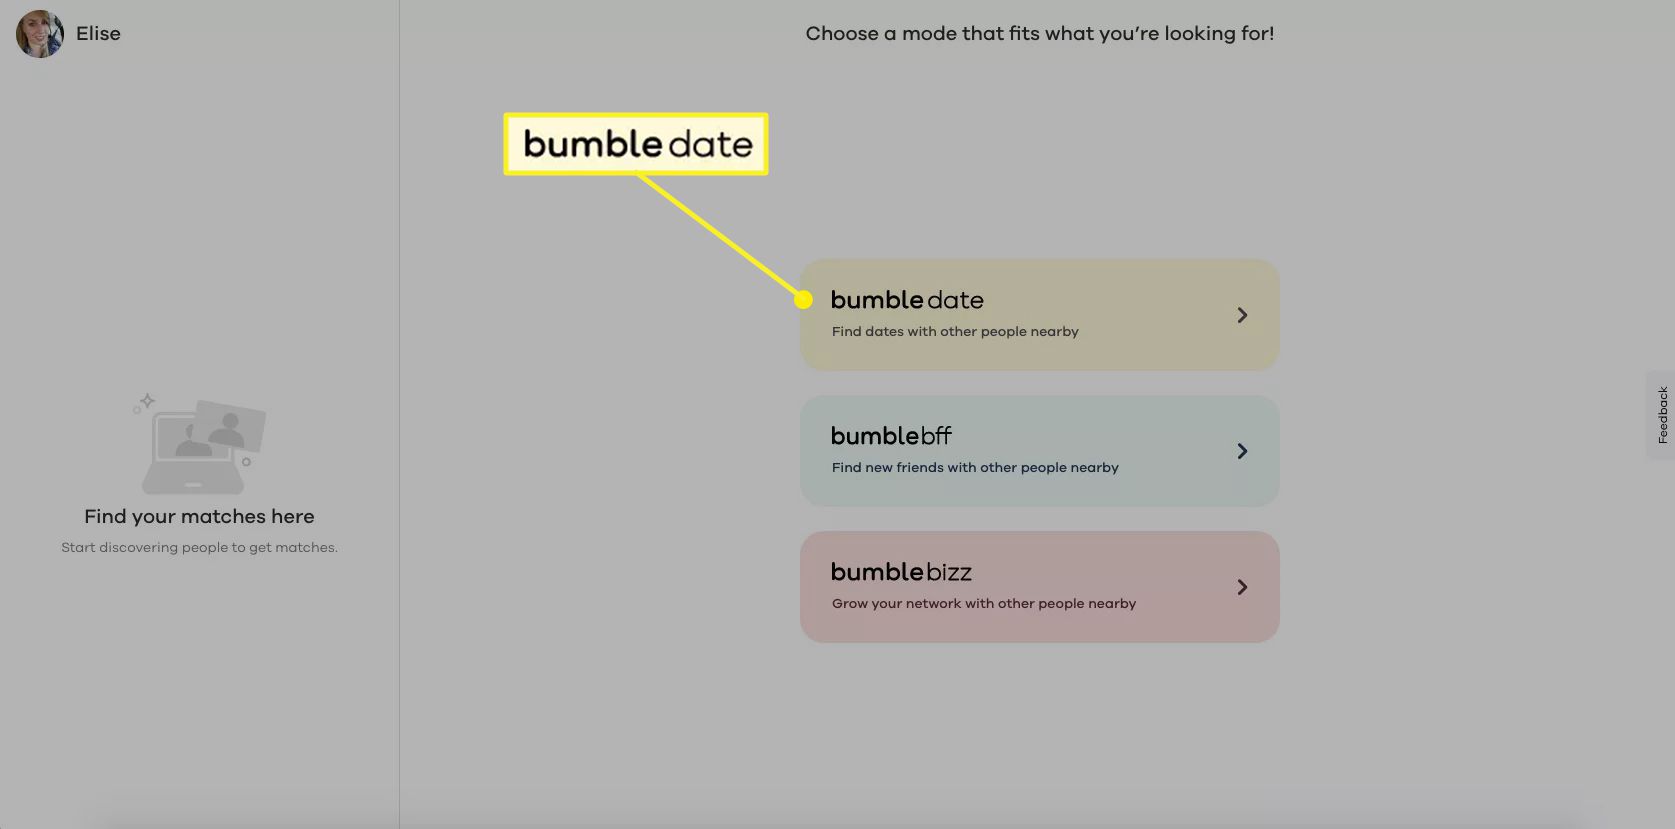 Bumble.com mostrando as opções BumbleDate, BumbleBFF e BumbleBizz